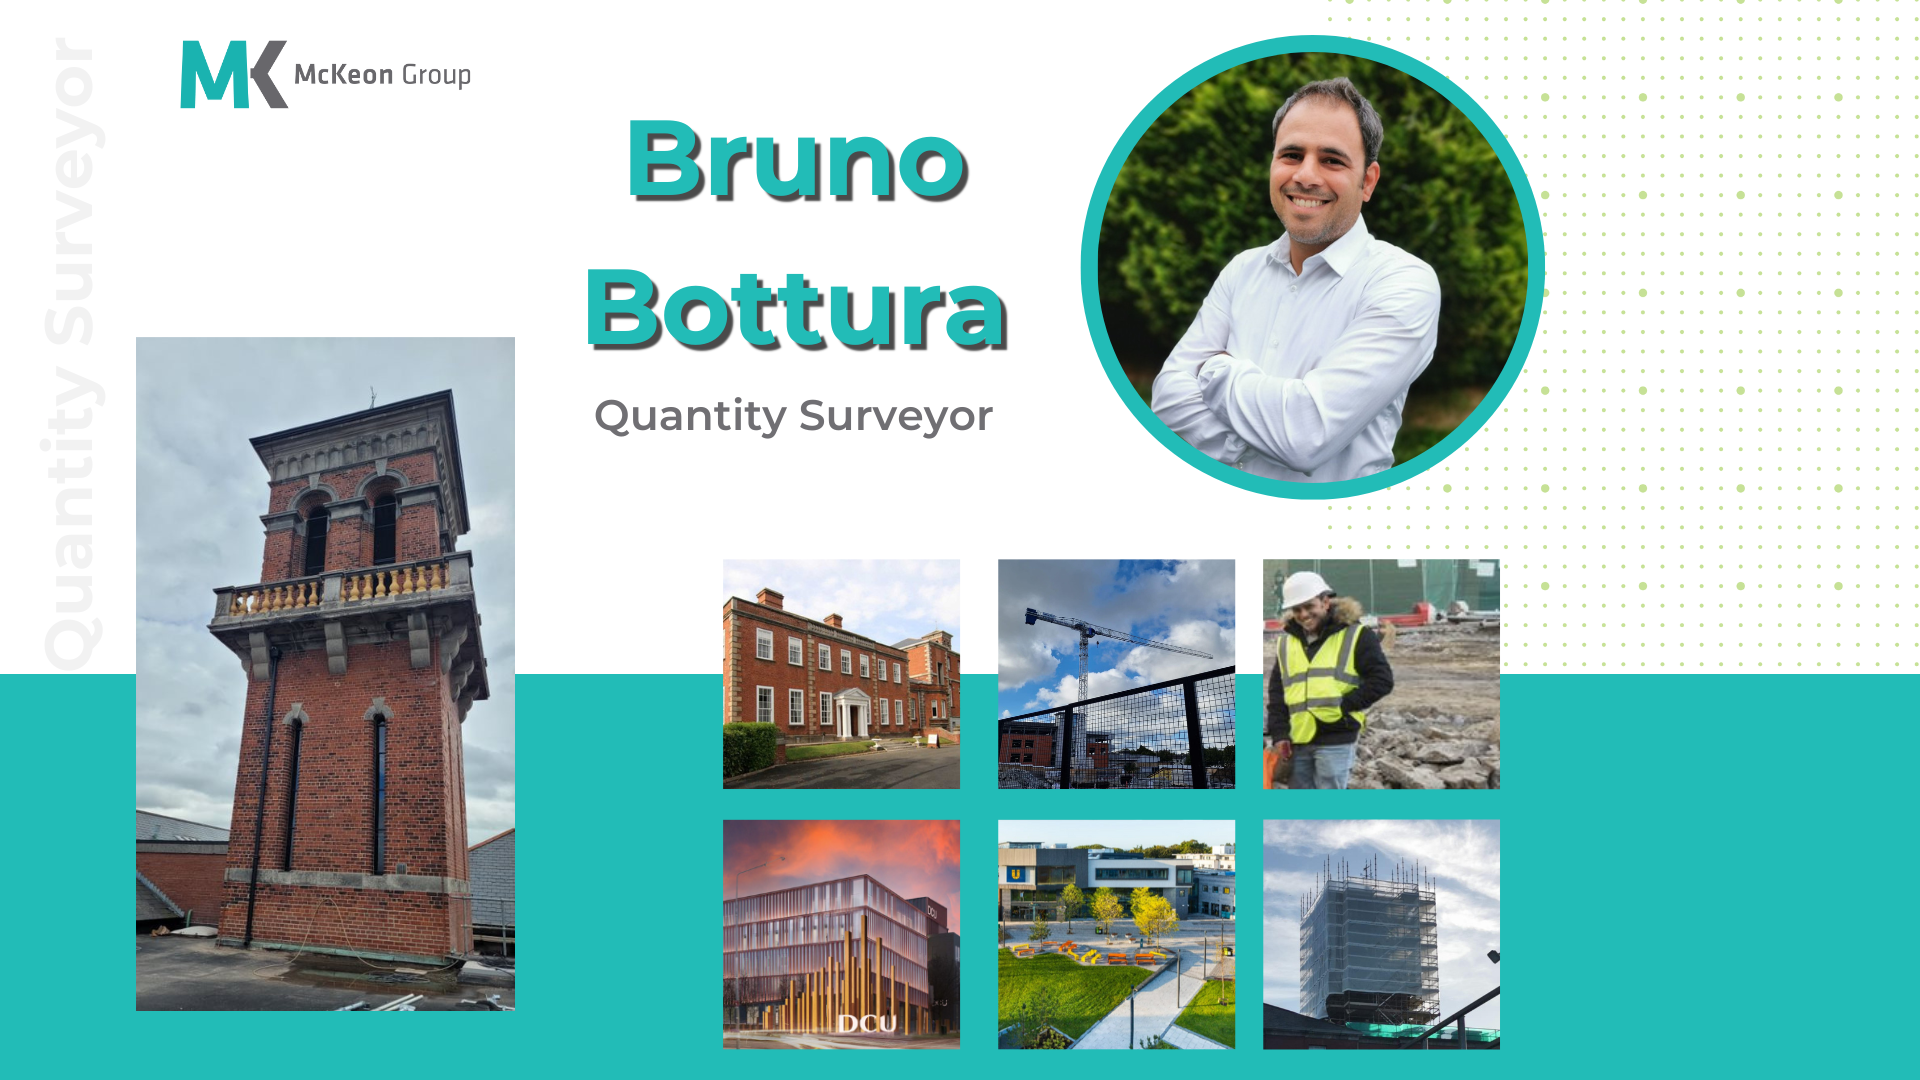 Meet the Team: Bruno Bottura, Quantity Surveyor